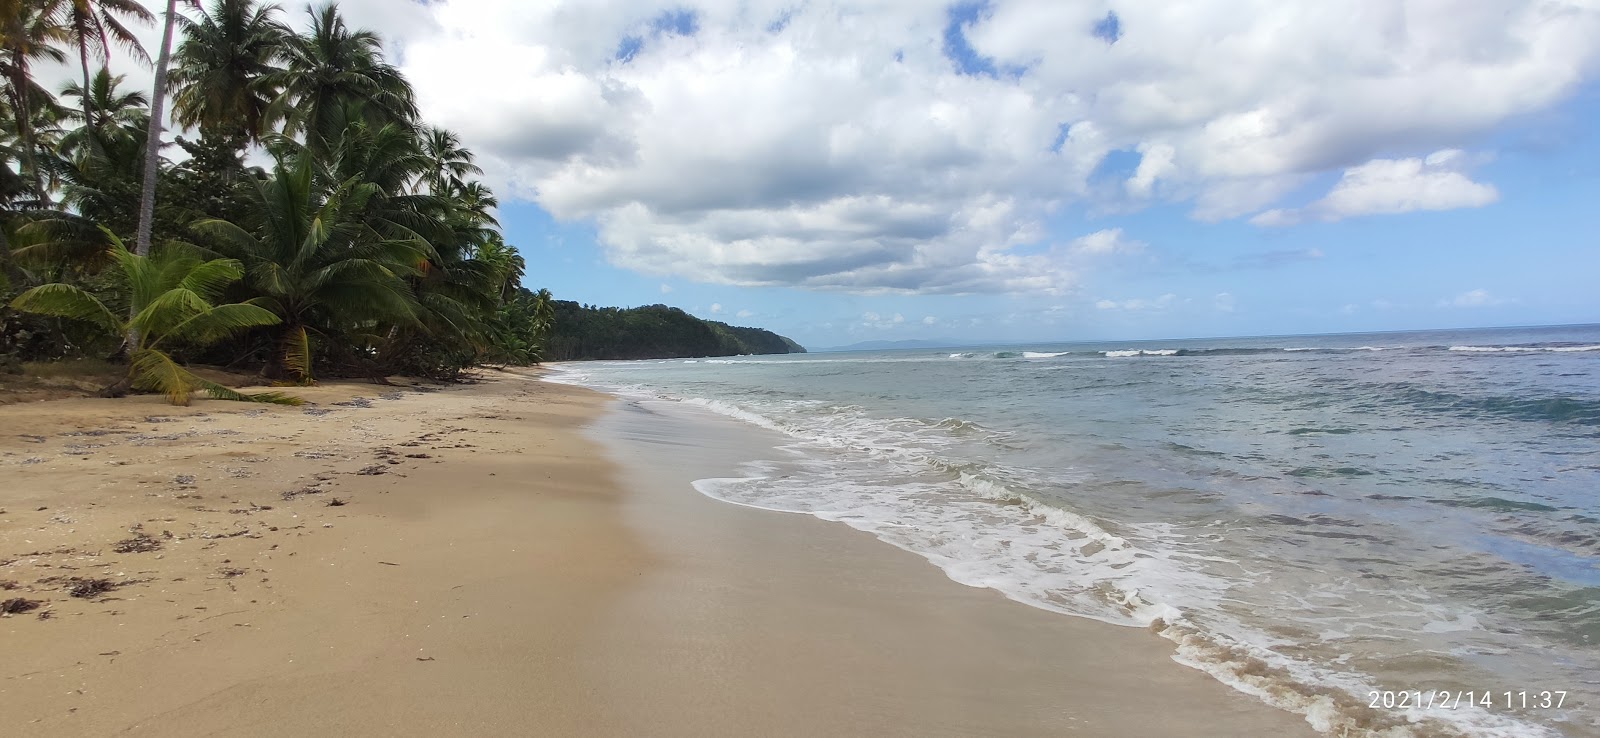 Fotografija Playa Expiracion de Coson z svetel fin pesek površino